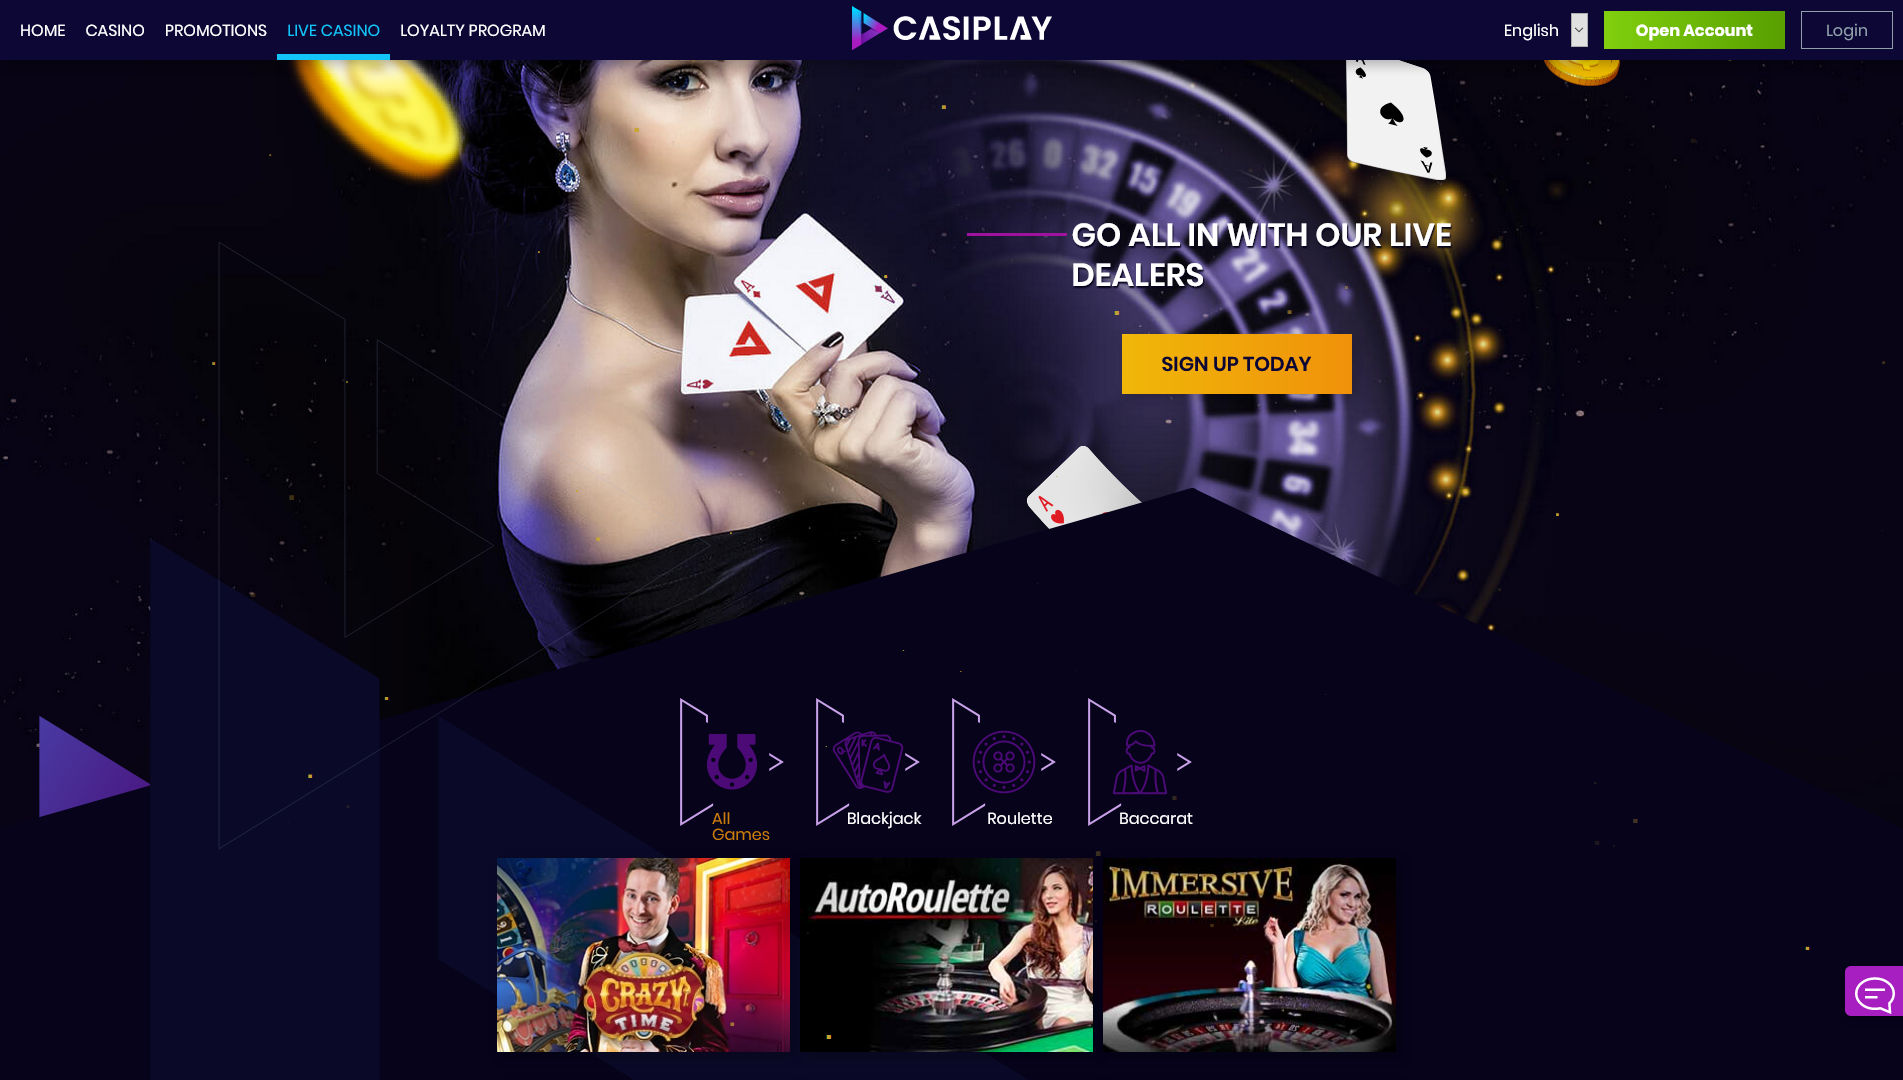 Casiplay Casino Live Dealer Games